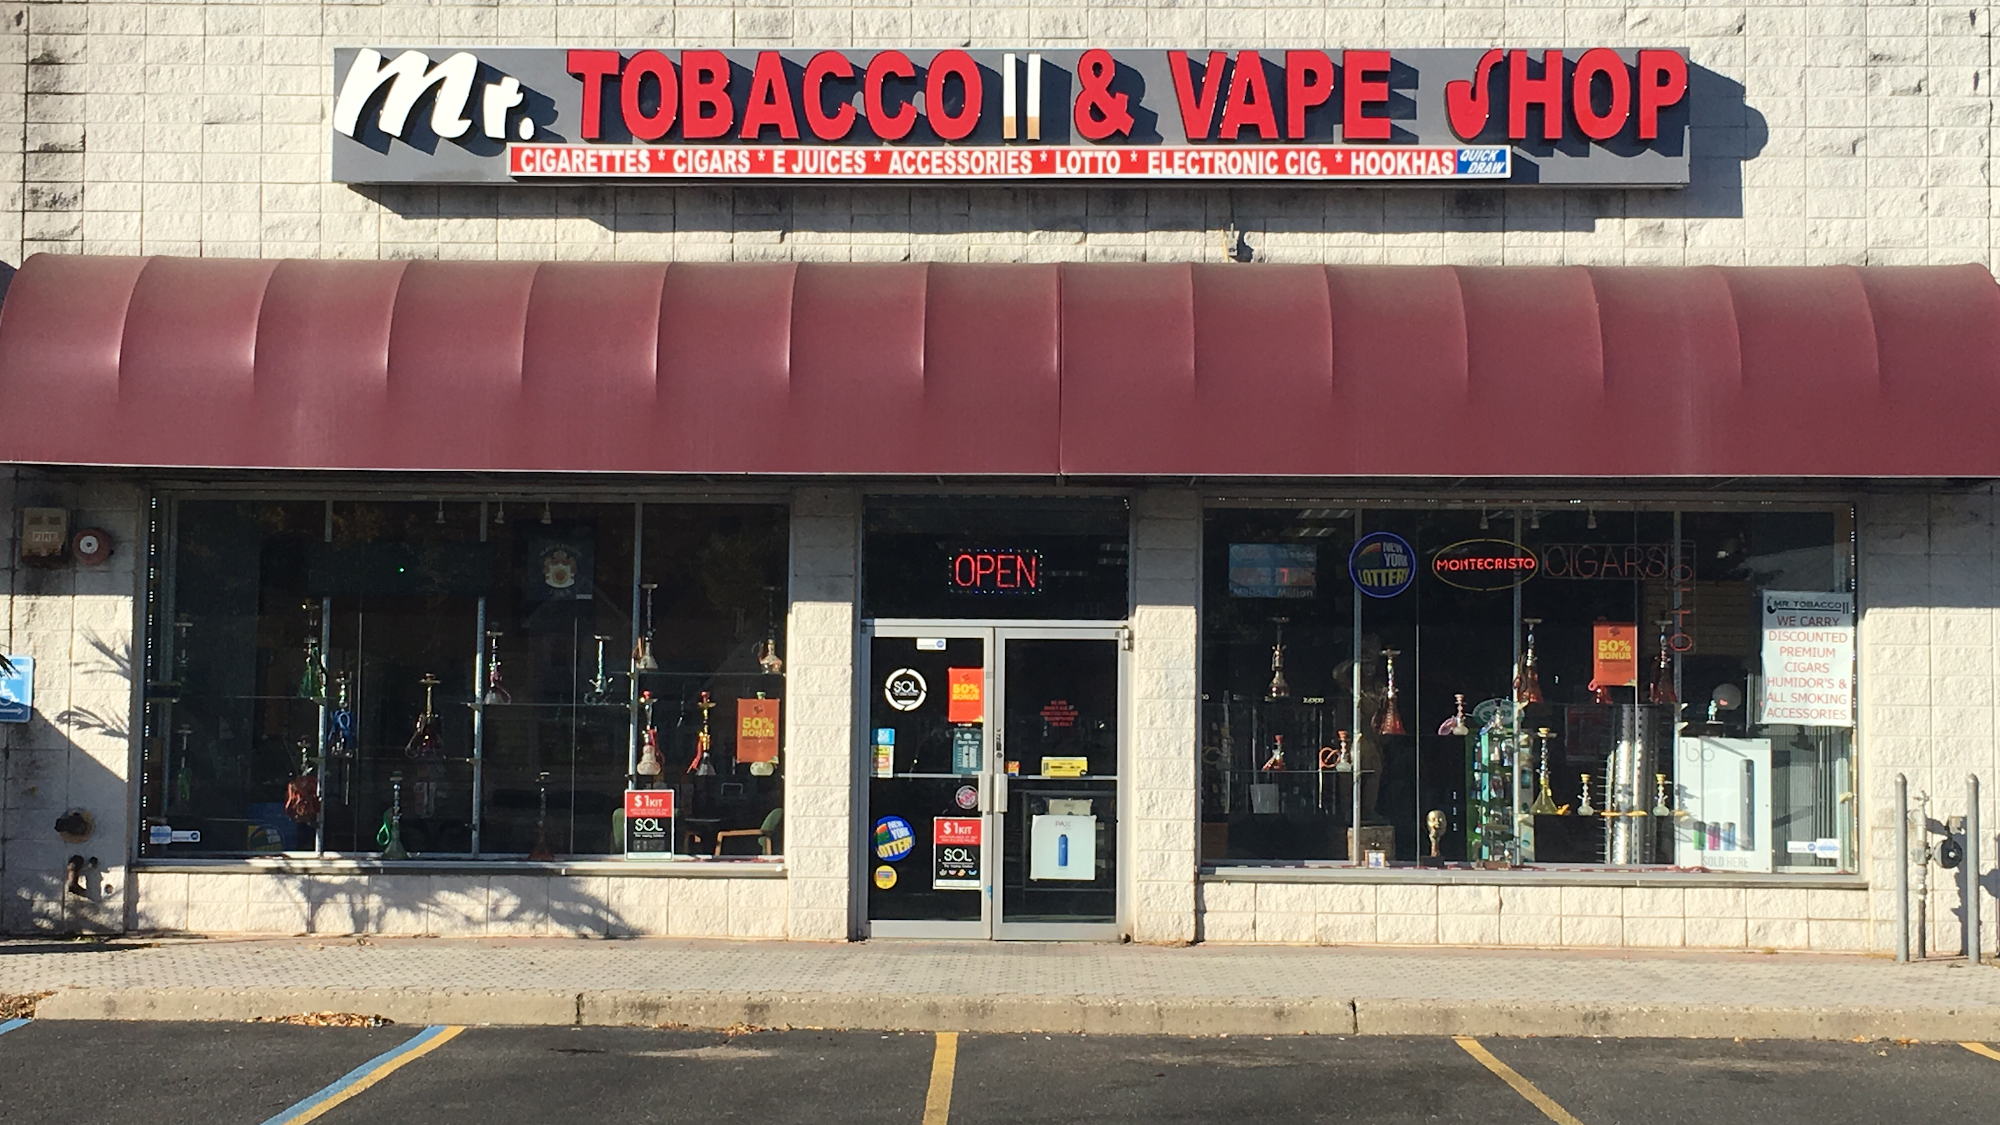 Mr Tobacco 2 Smoke and Vape Shop